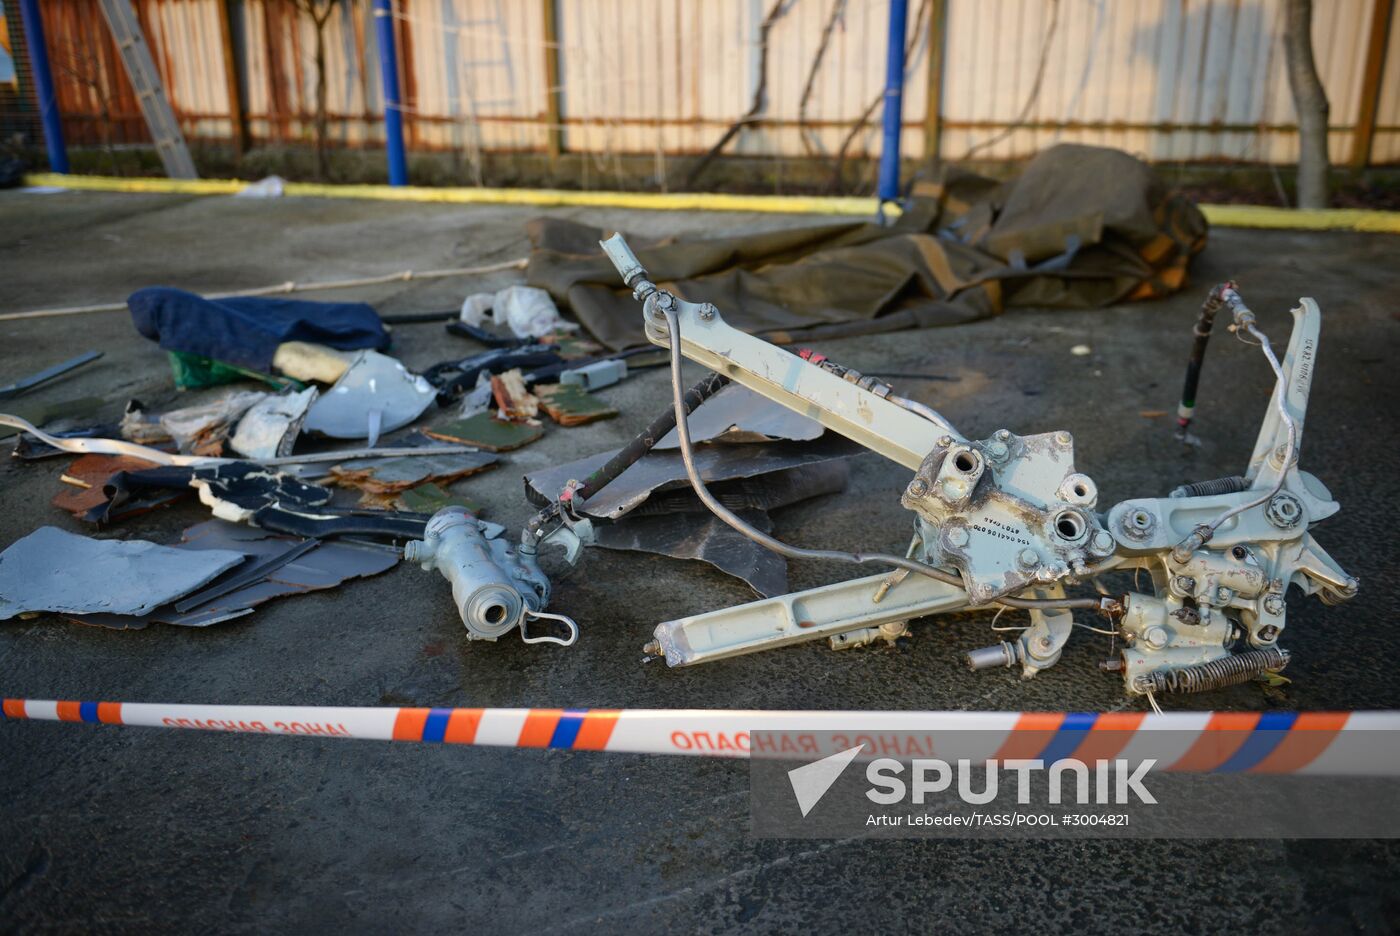 Search operation at Tu-154 crash site